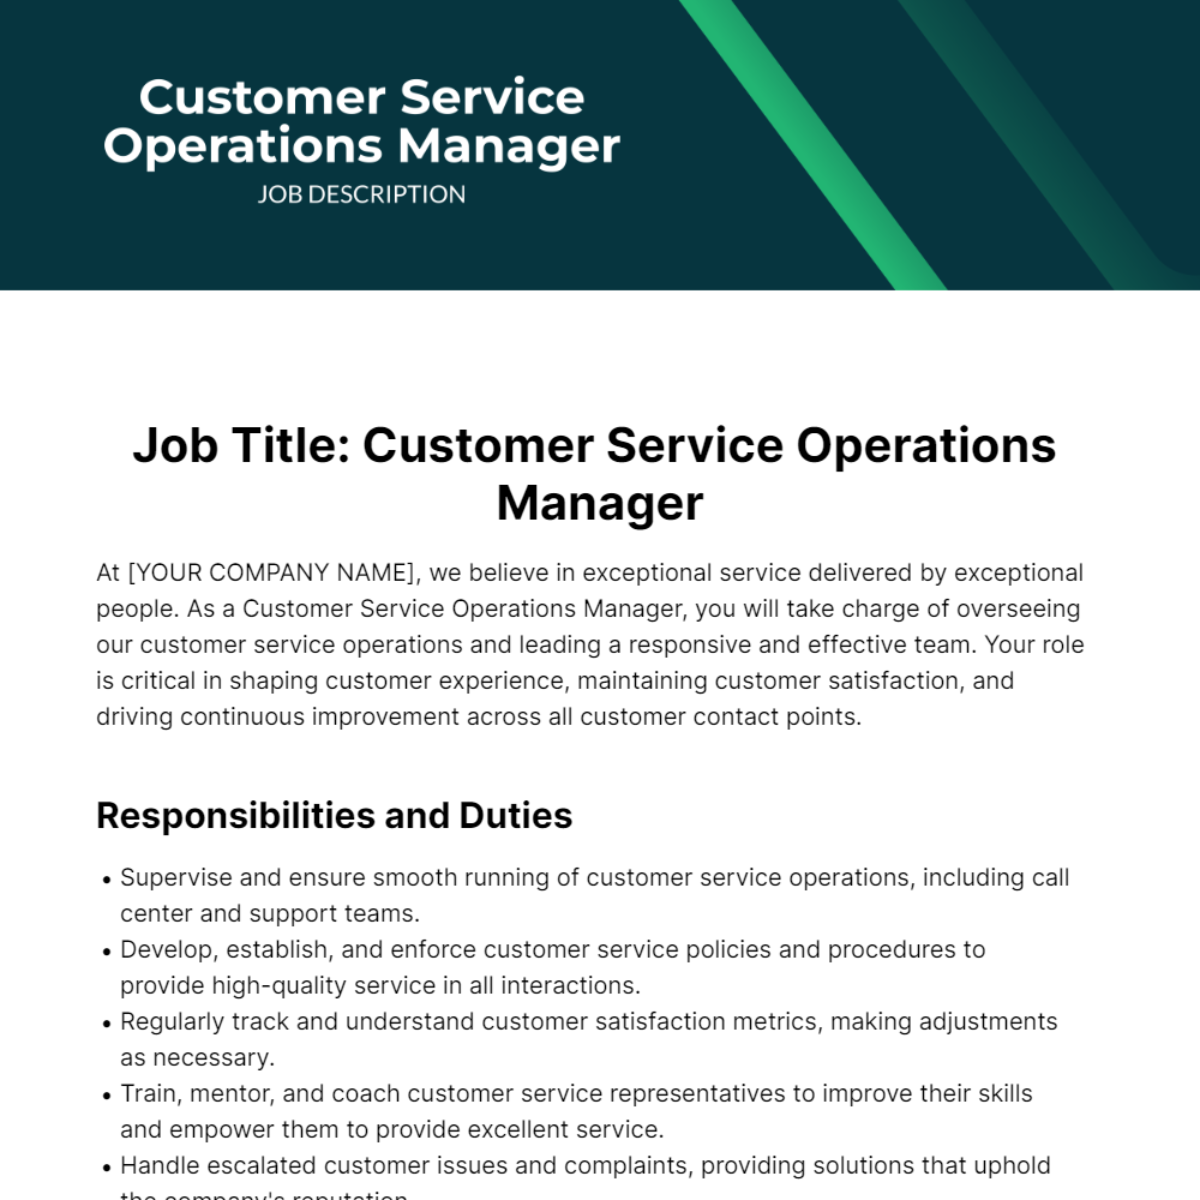 Customer Service Operations Manager Job Description Template